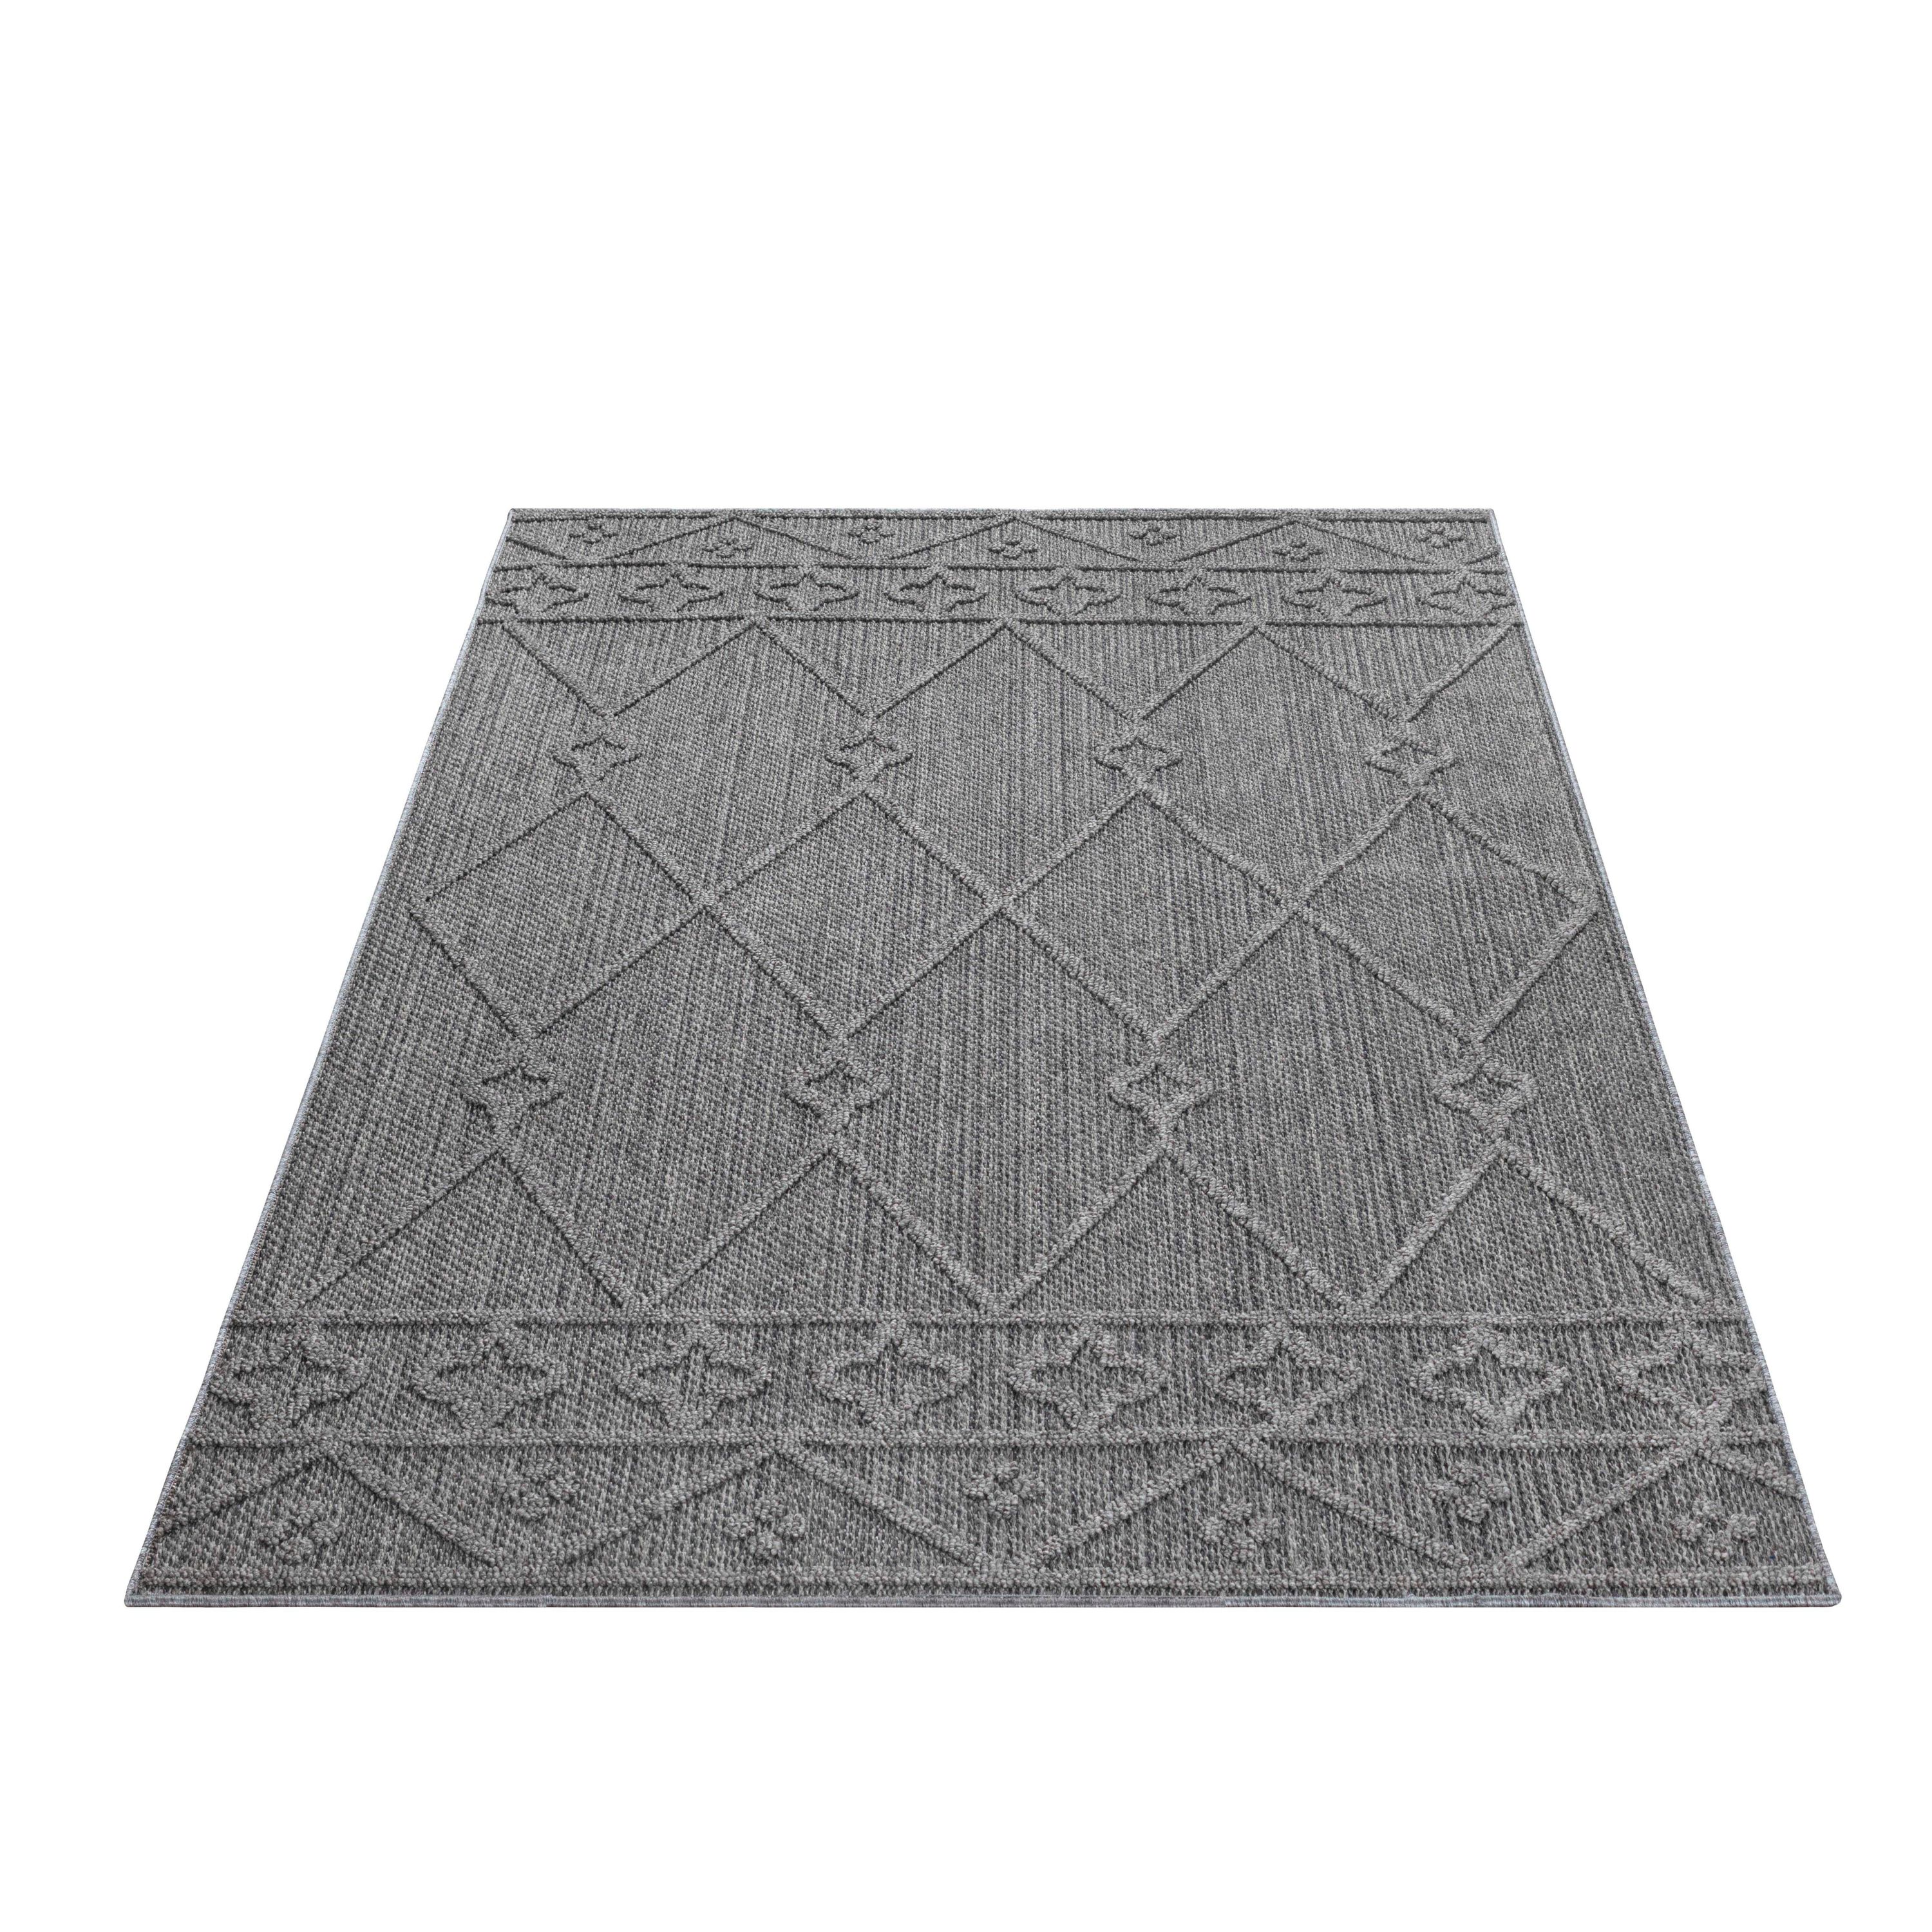 In- Outdoor Teppich Flachgewebt Sisal Optik Einfarbig 3D Ethno Design Grau